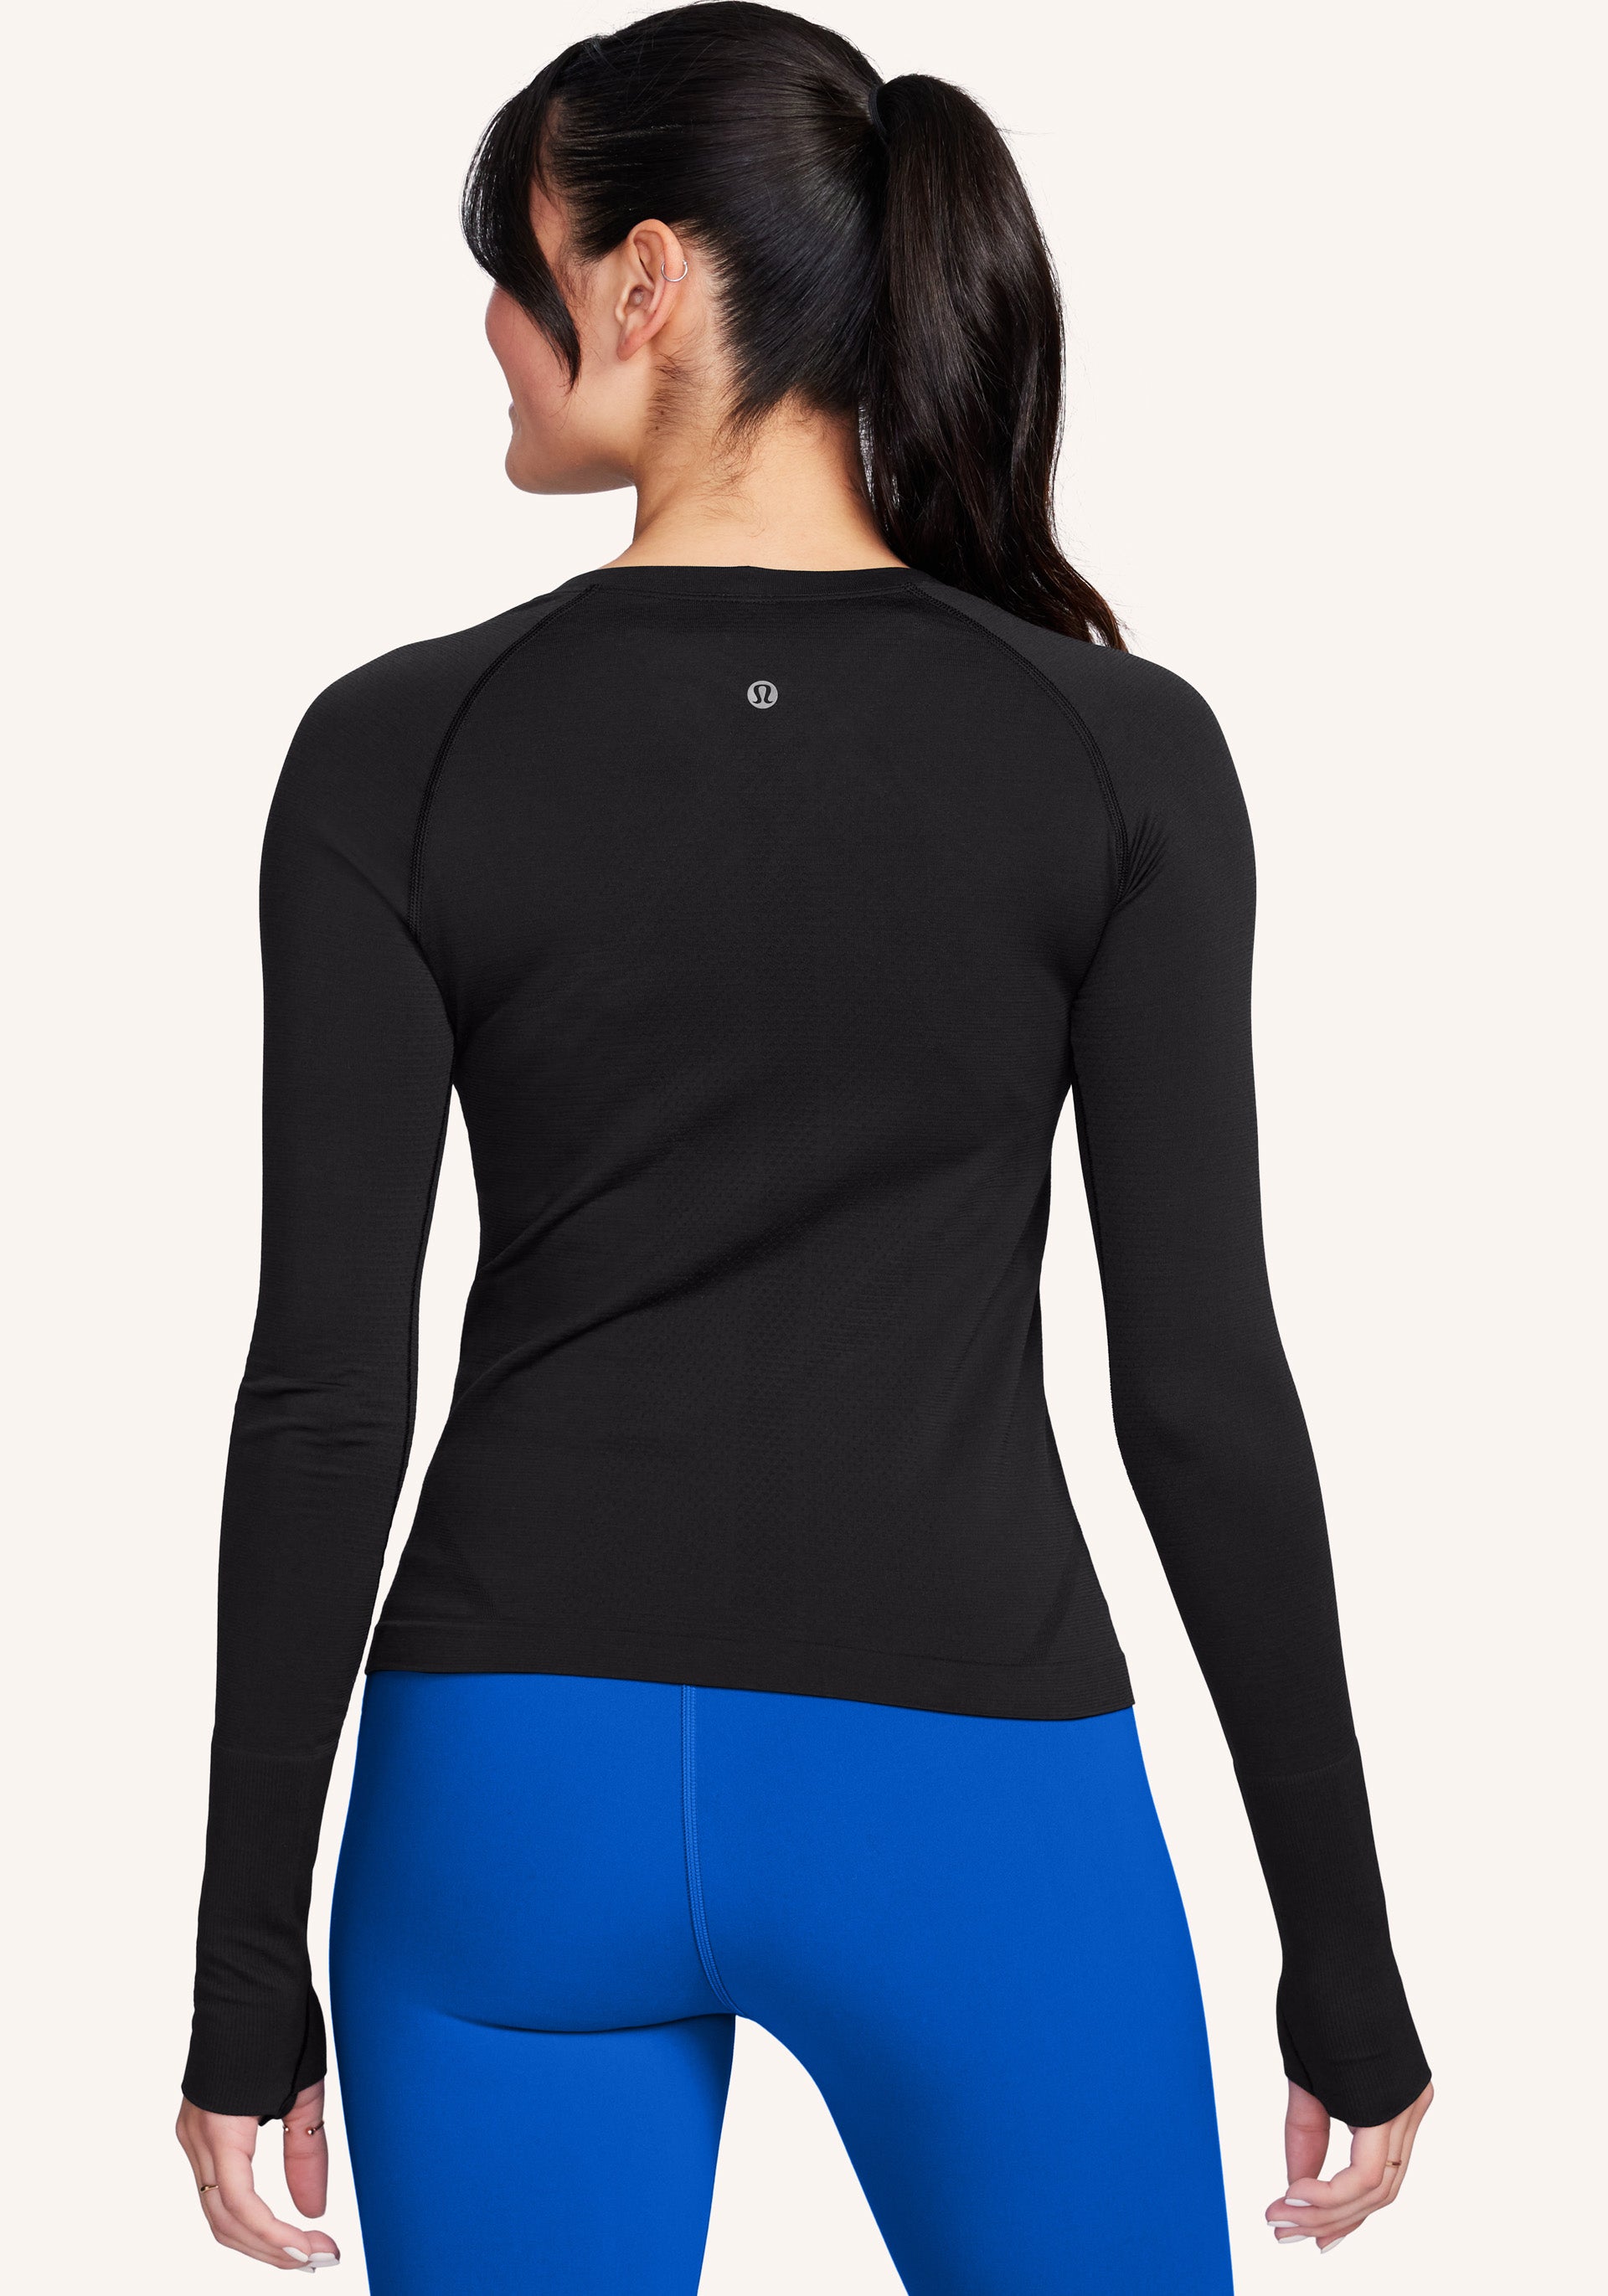 NWT Lululemon Swiftly Tech Long Sleeve Shirt 2.0 Multi Colors and Sizes